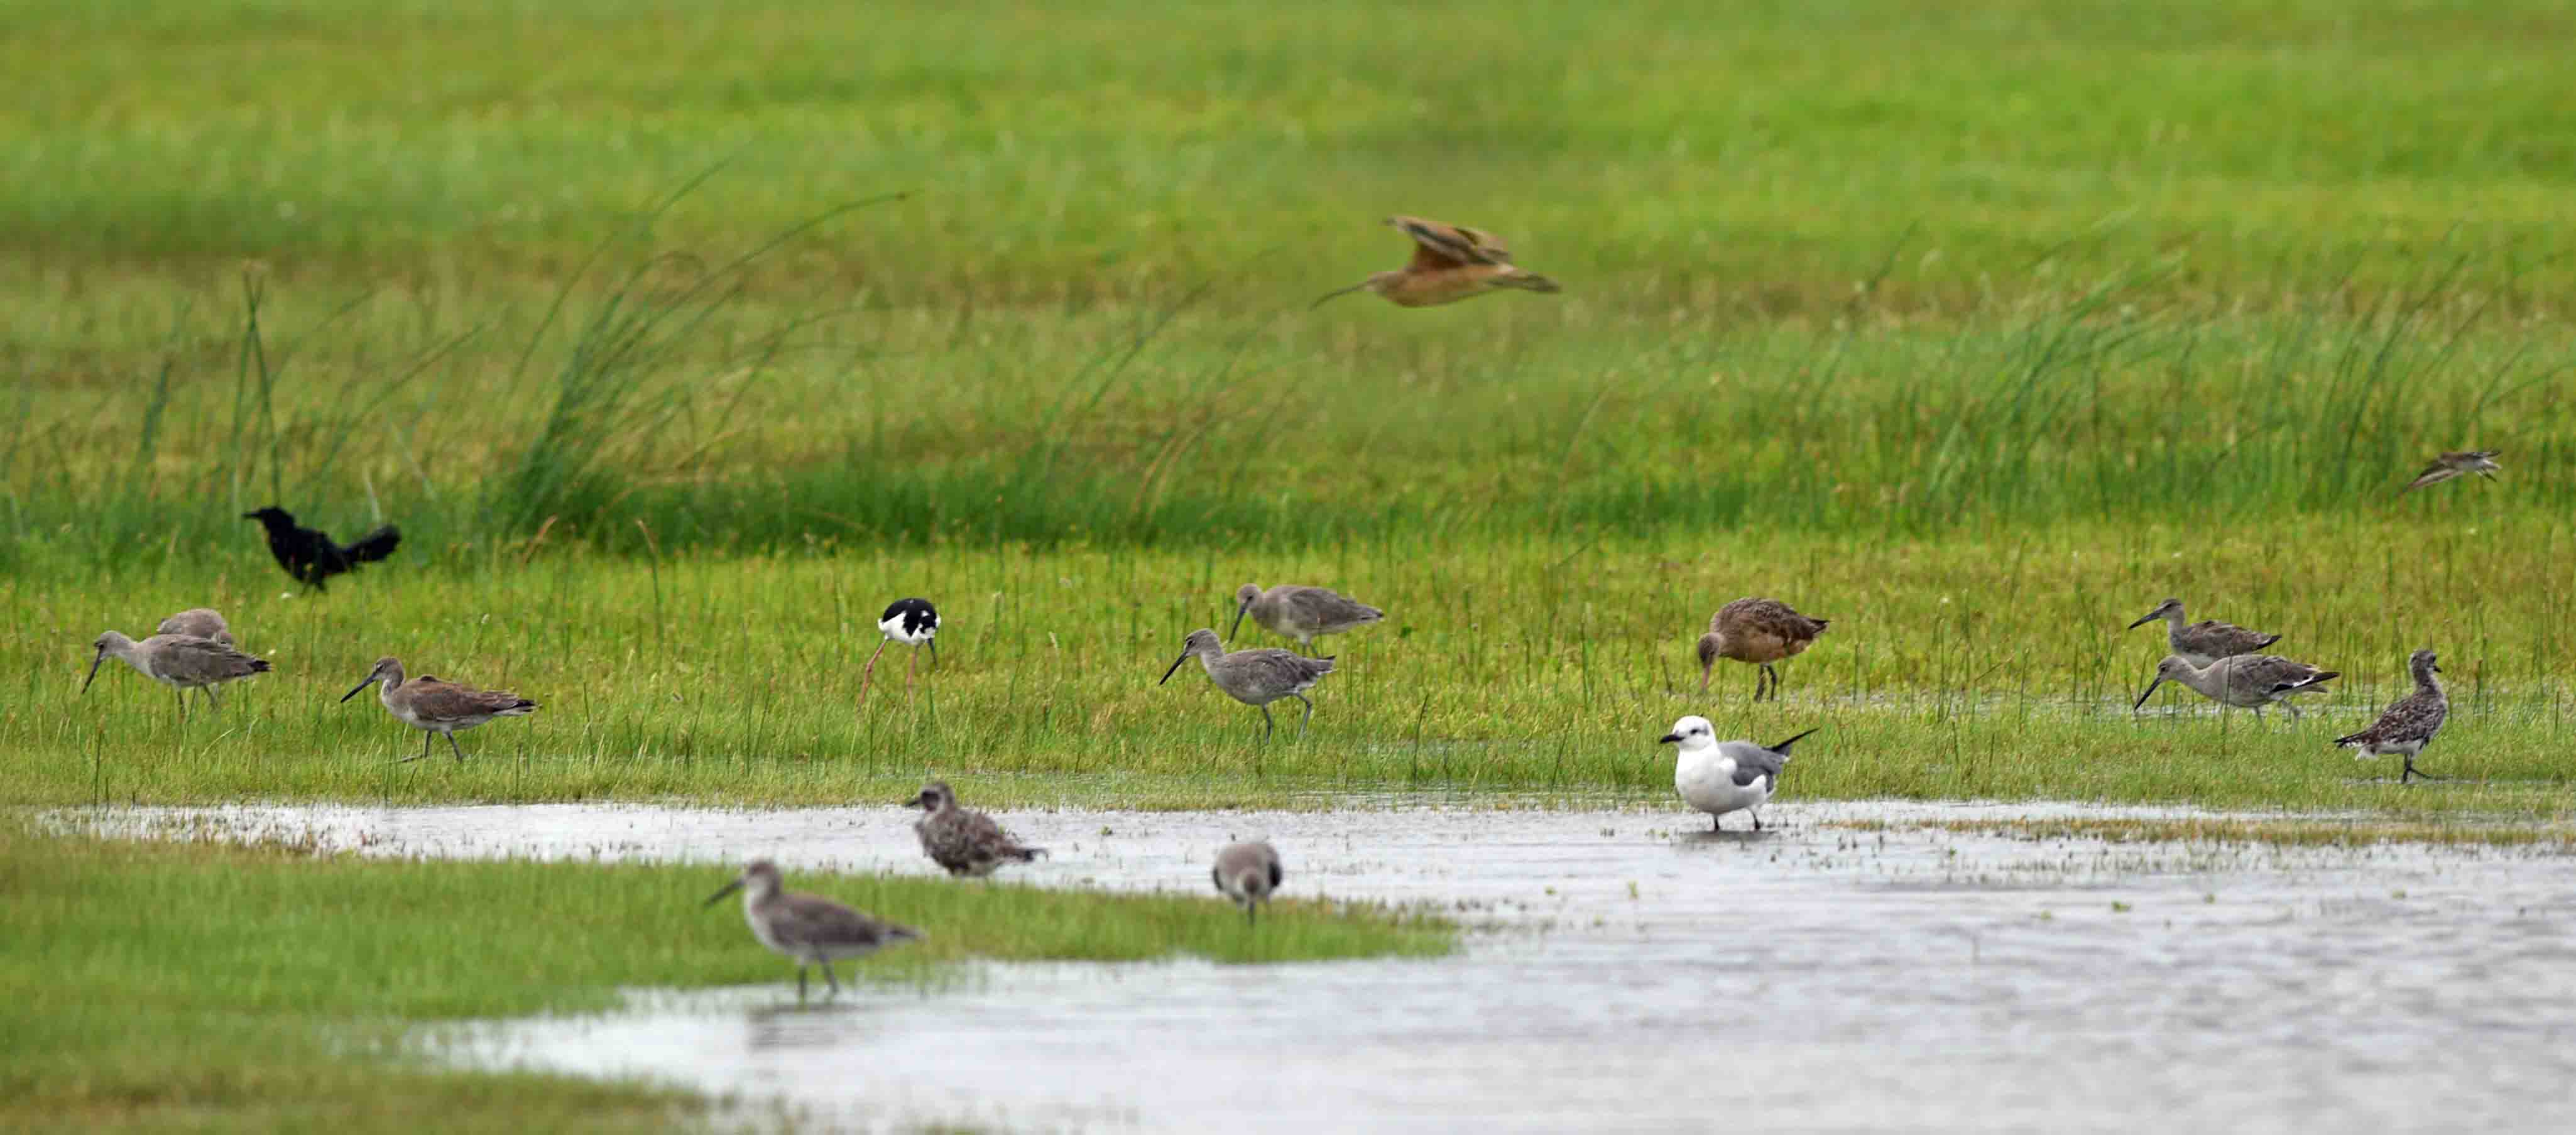 shore birds in water in galveston island texas